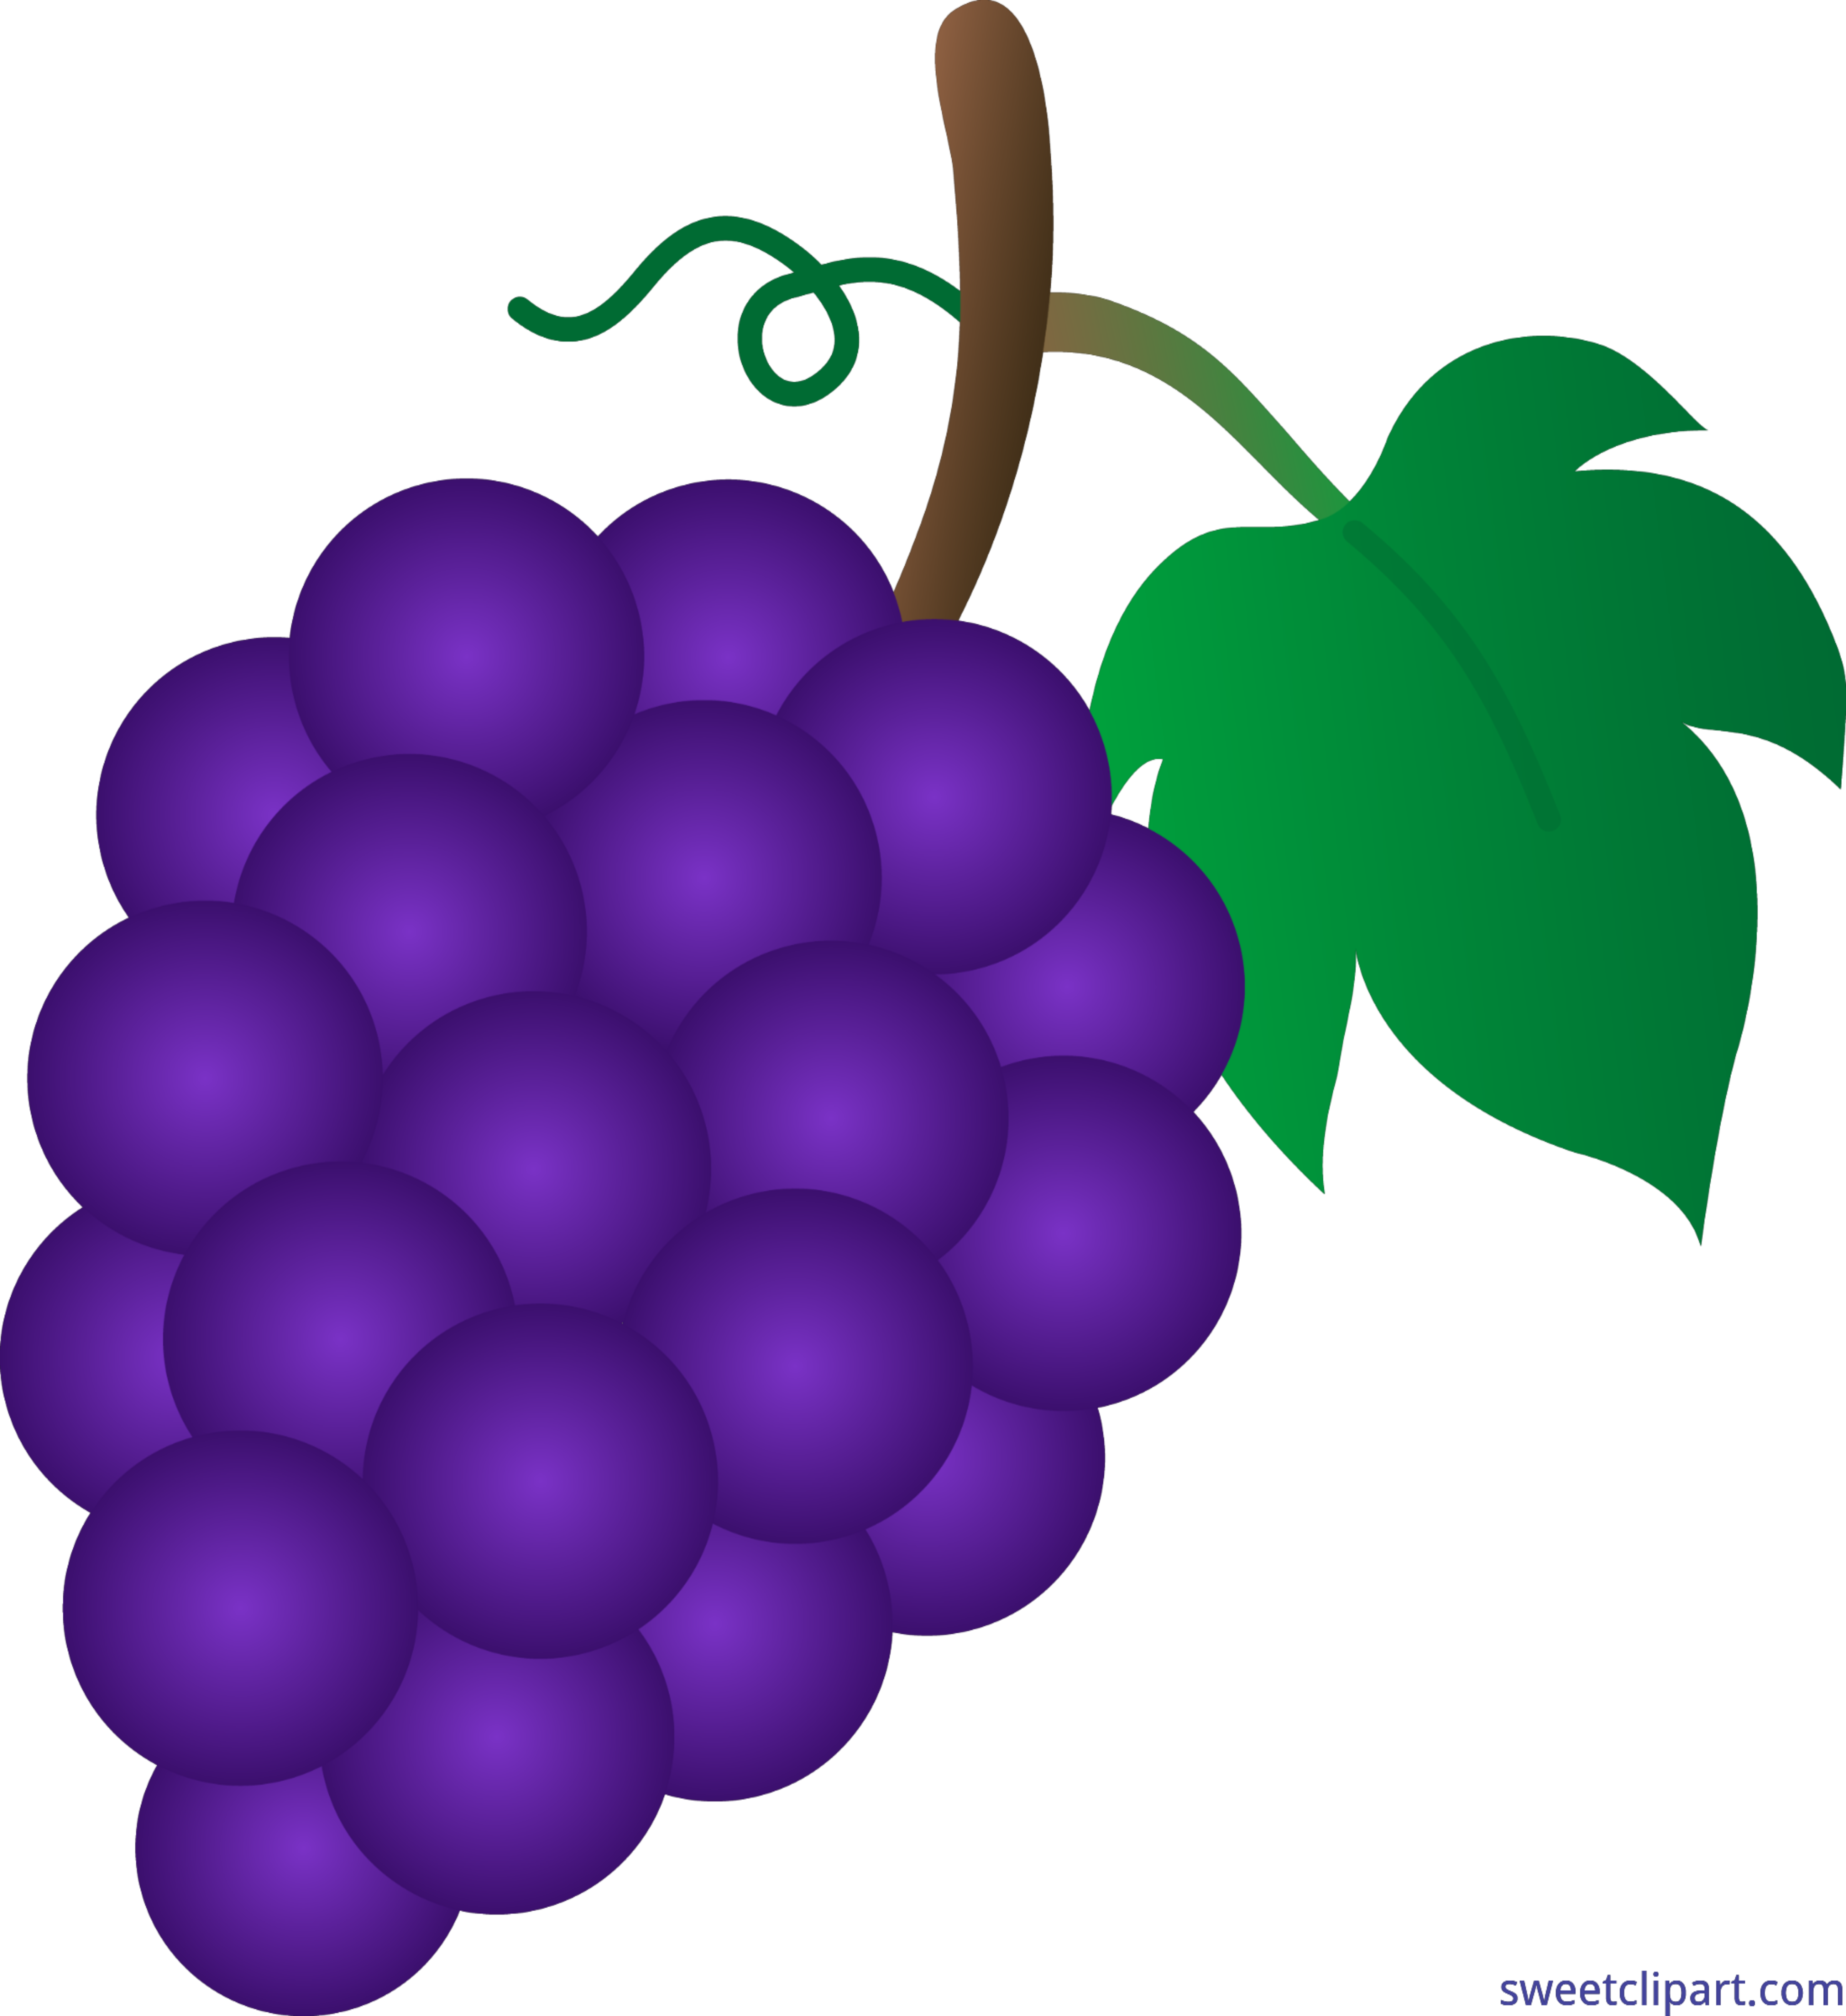 Grapes at getdrawings com. Grape clipart fruit